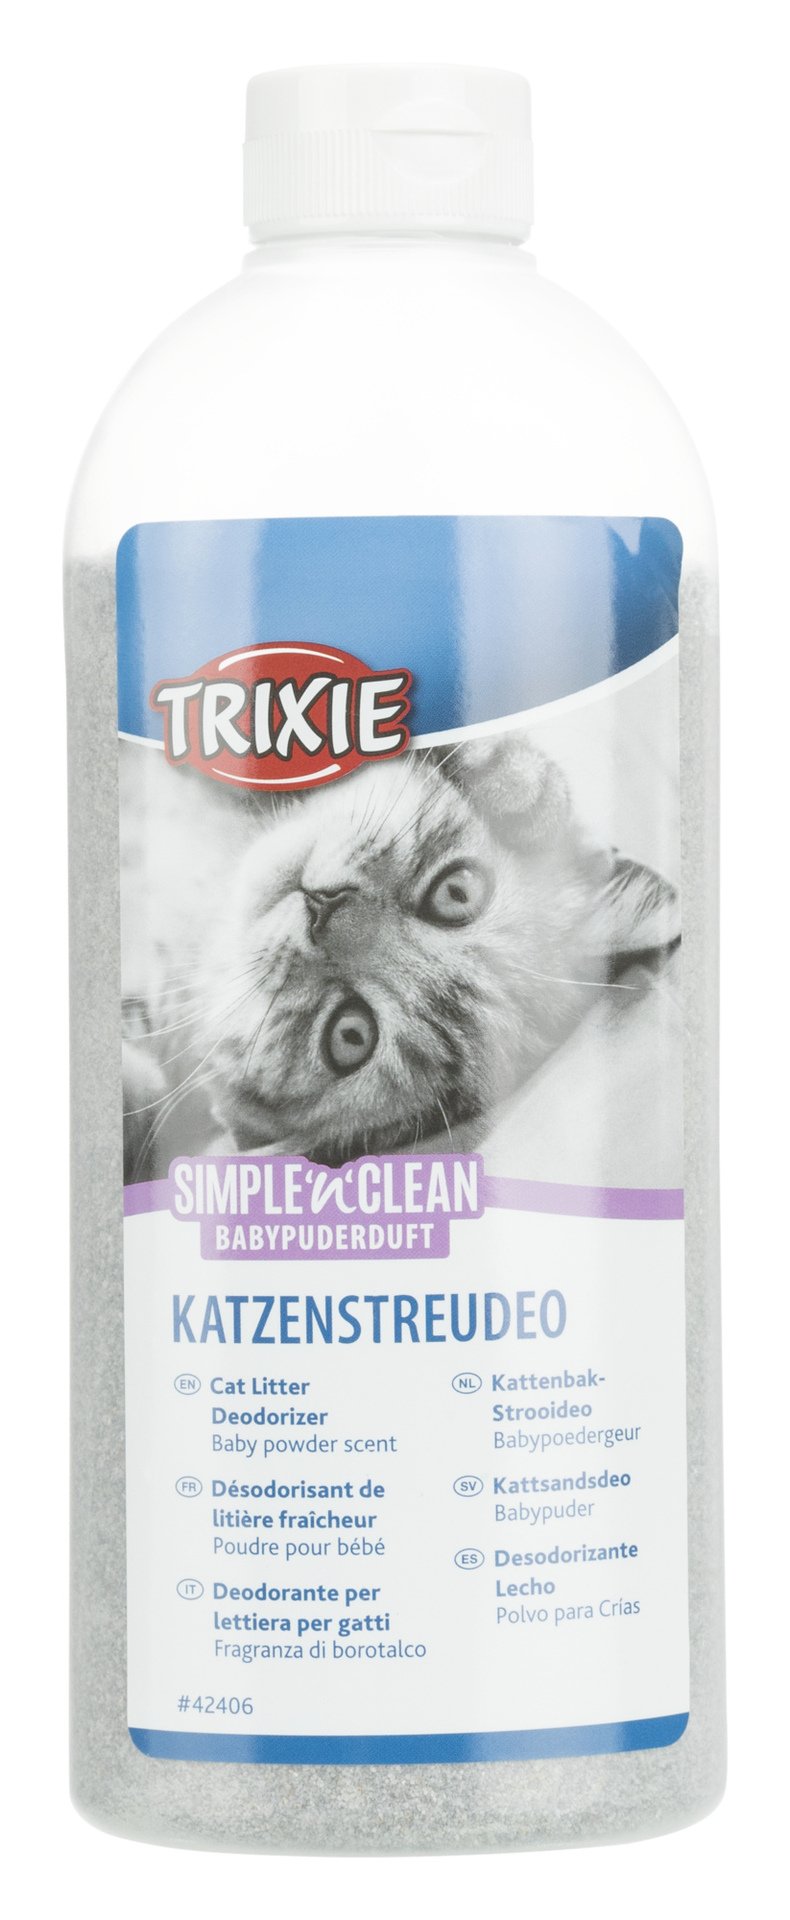 TRIXIE Simple’n’Clean Katzenstreudeo 750g